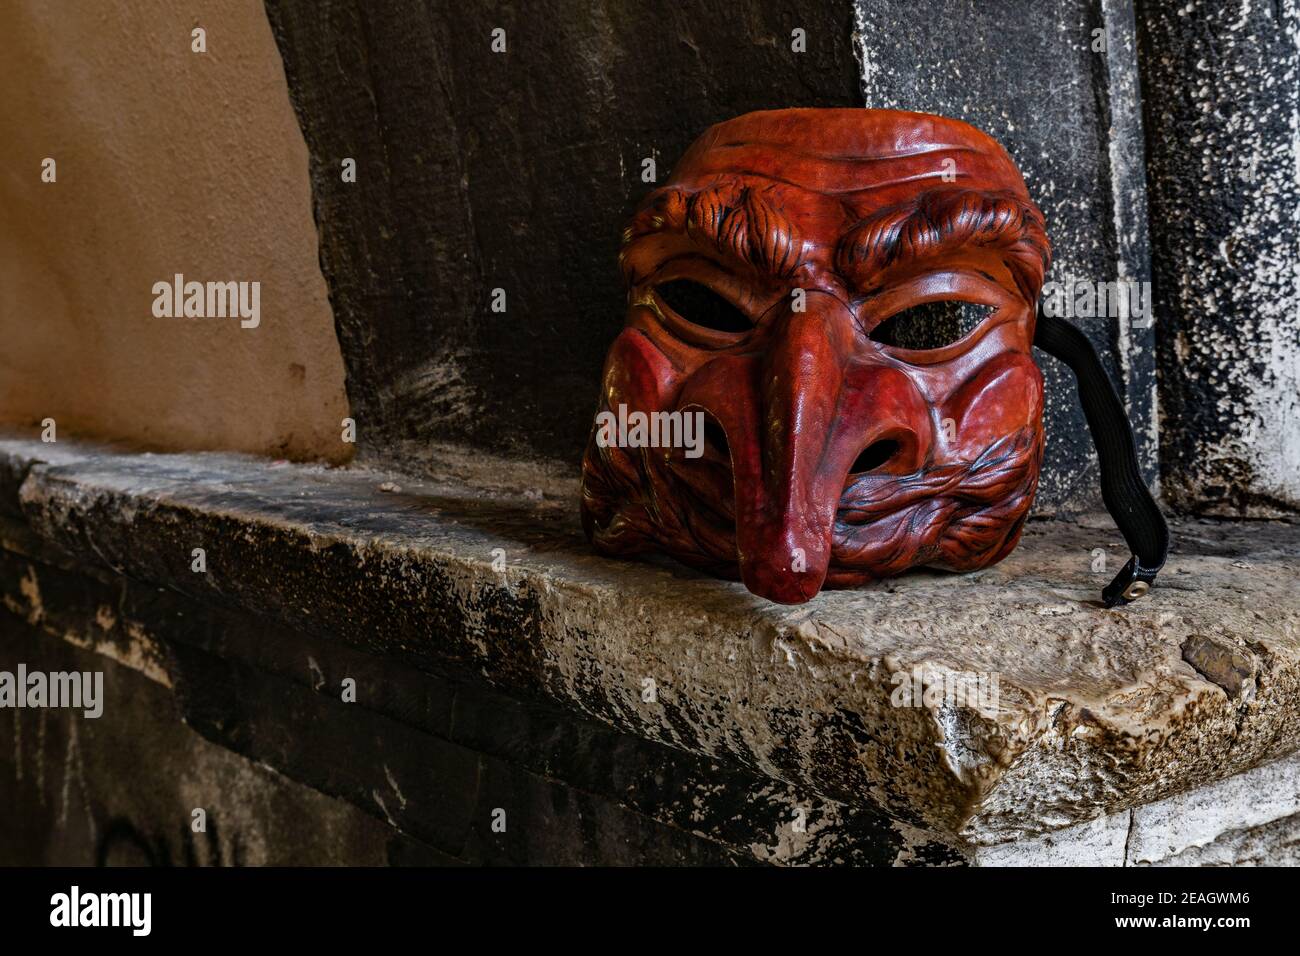 Leather theatre mask of Il Capitano (The Captain) by artist Carlo Setti from Venice who specialises in Commedia Dell'Arte masks. Stock Photo